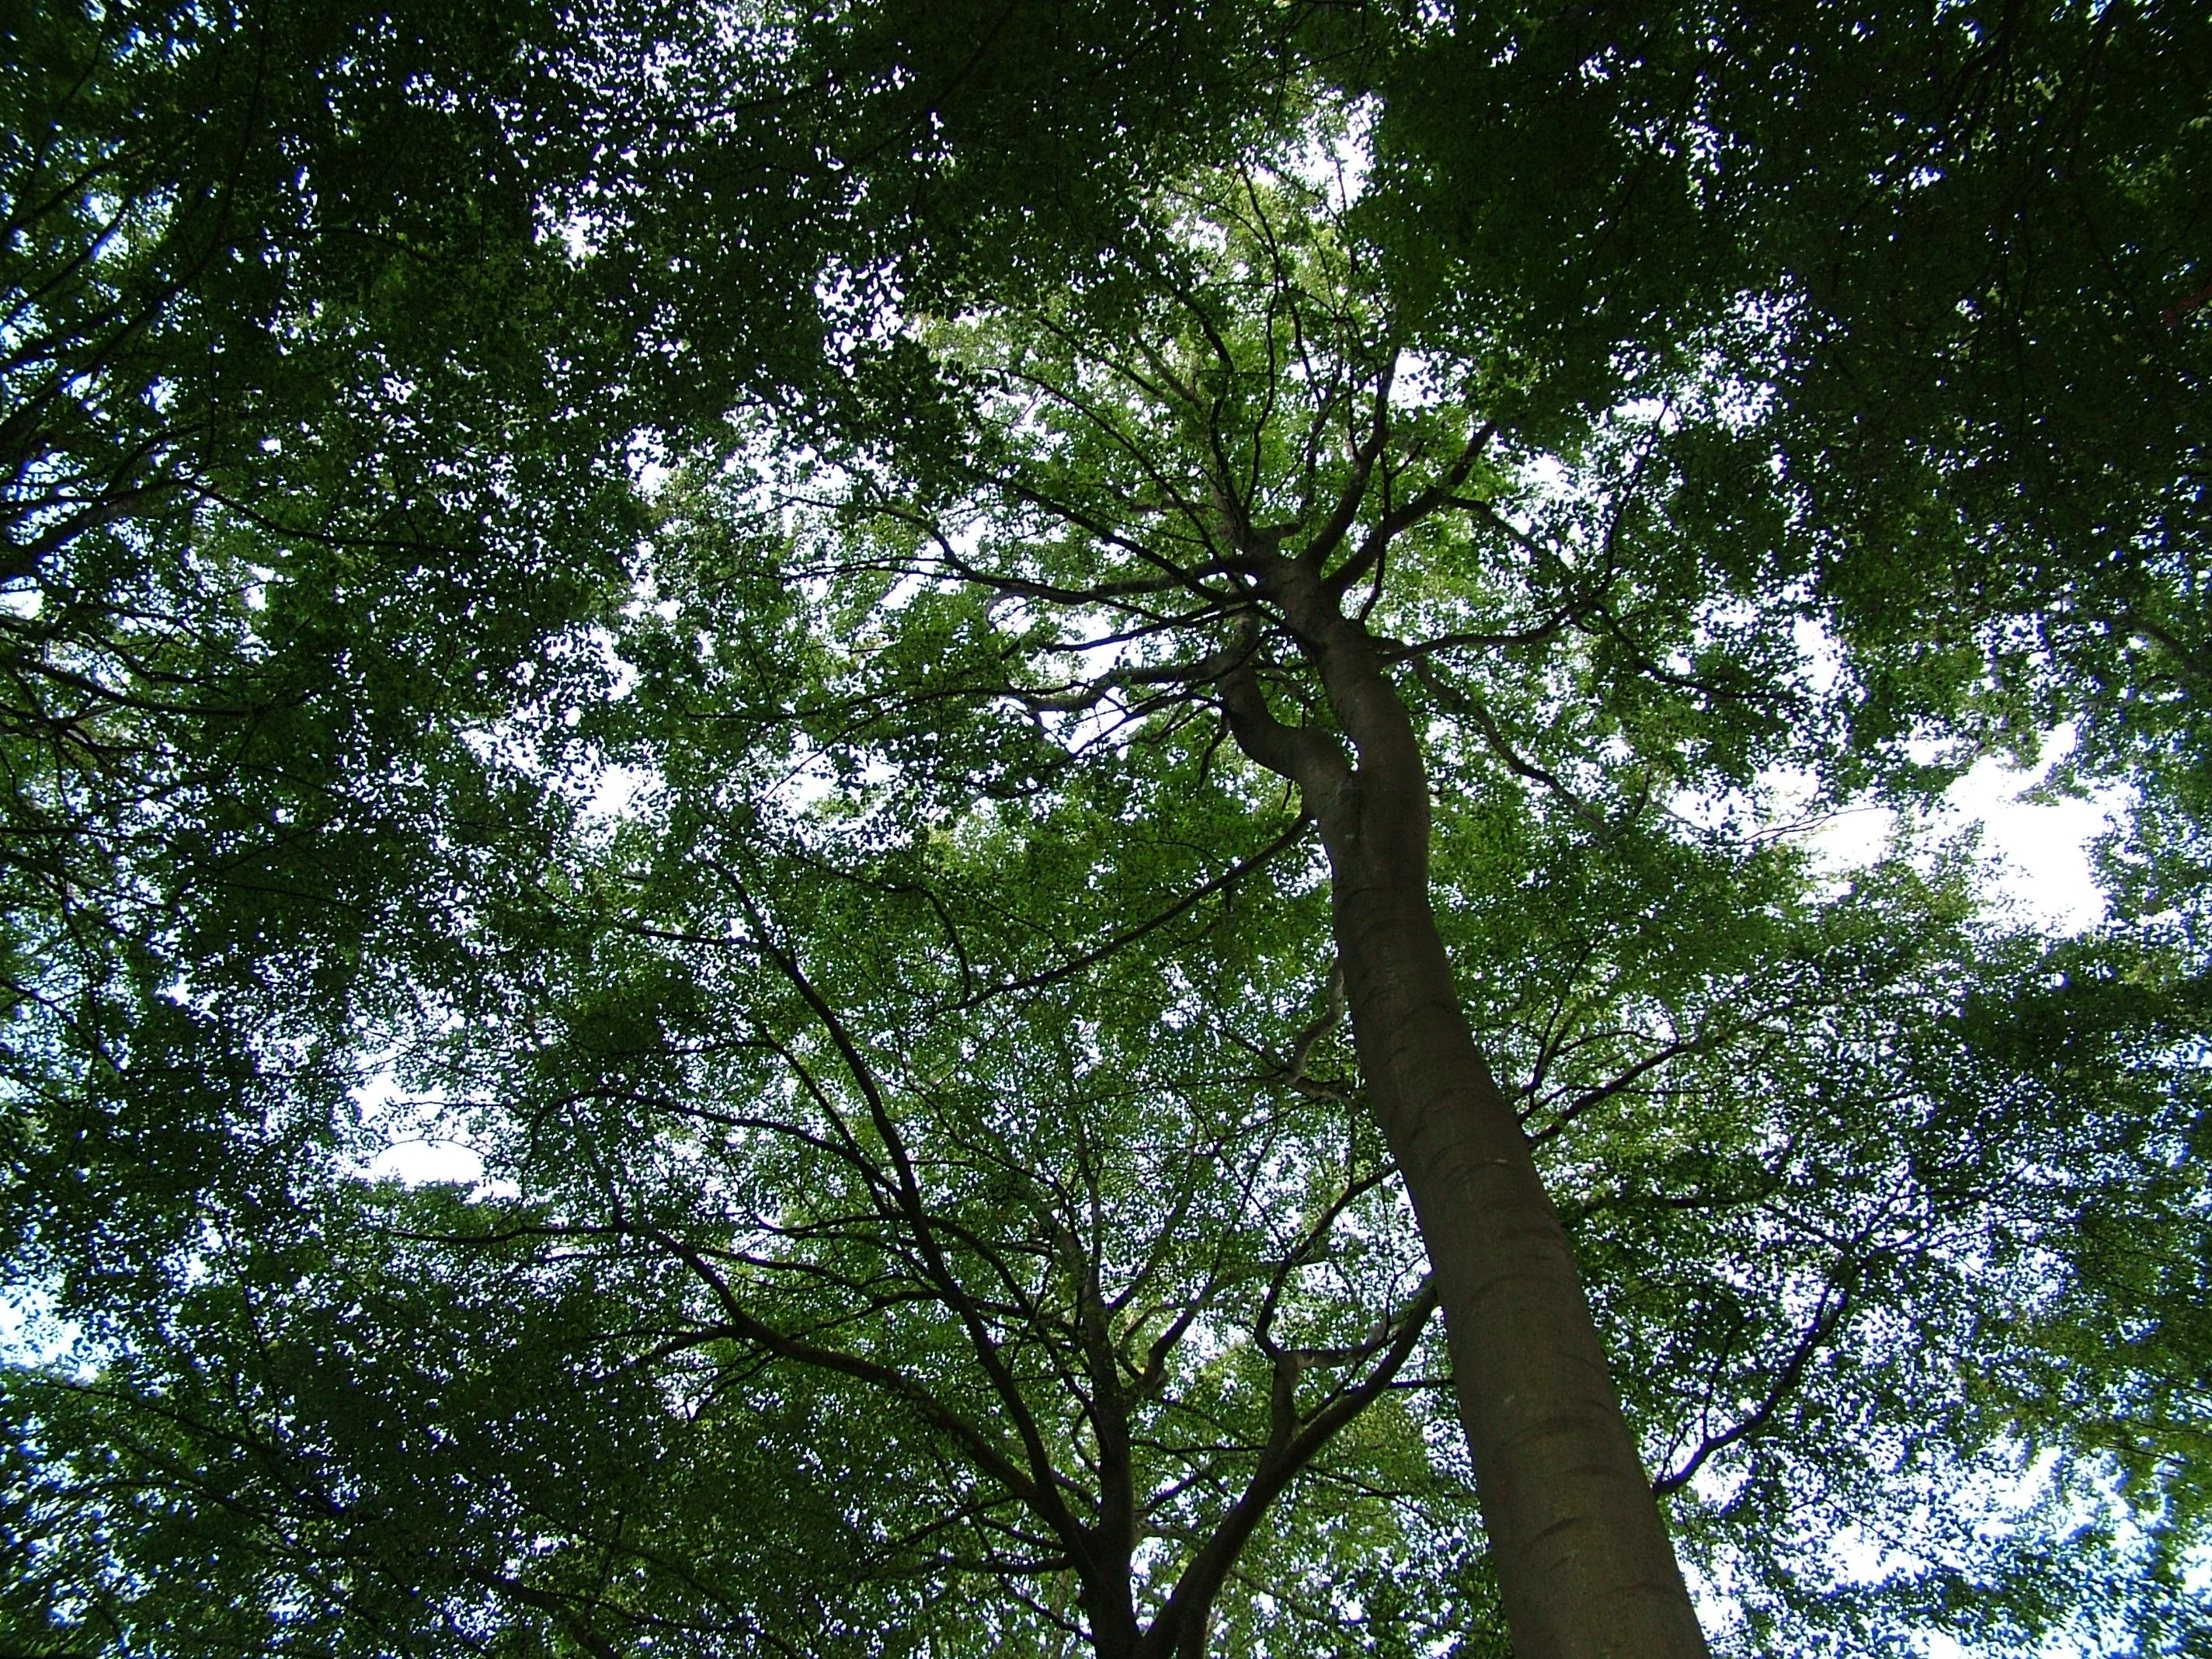 green leafed tree